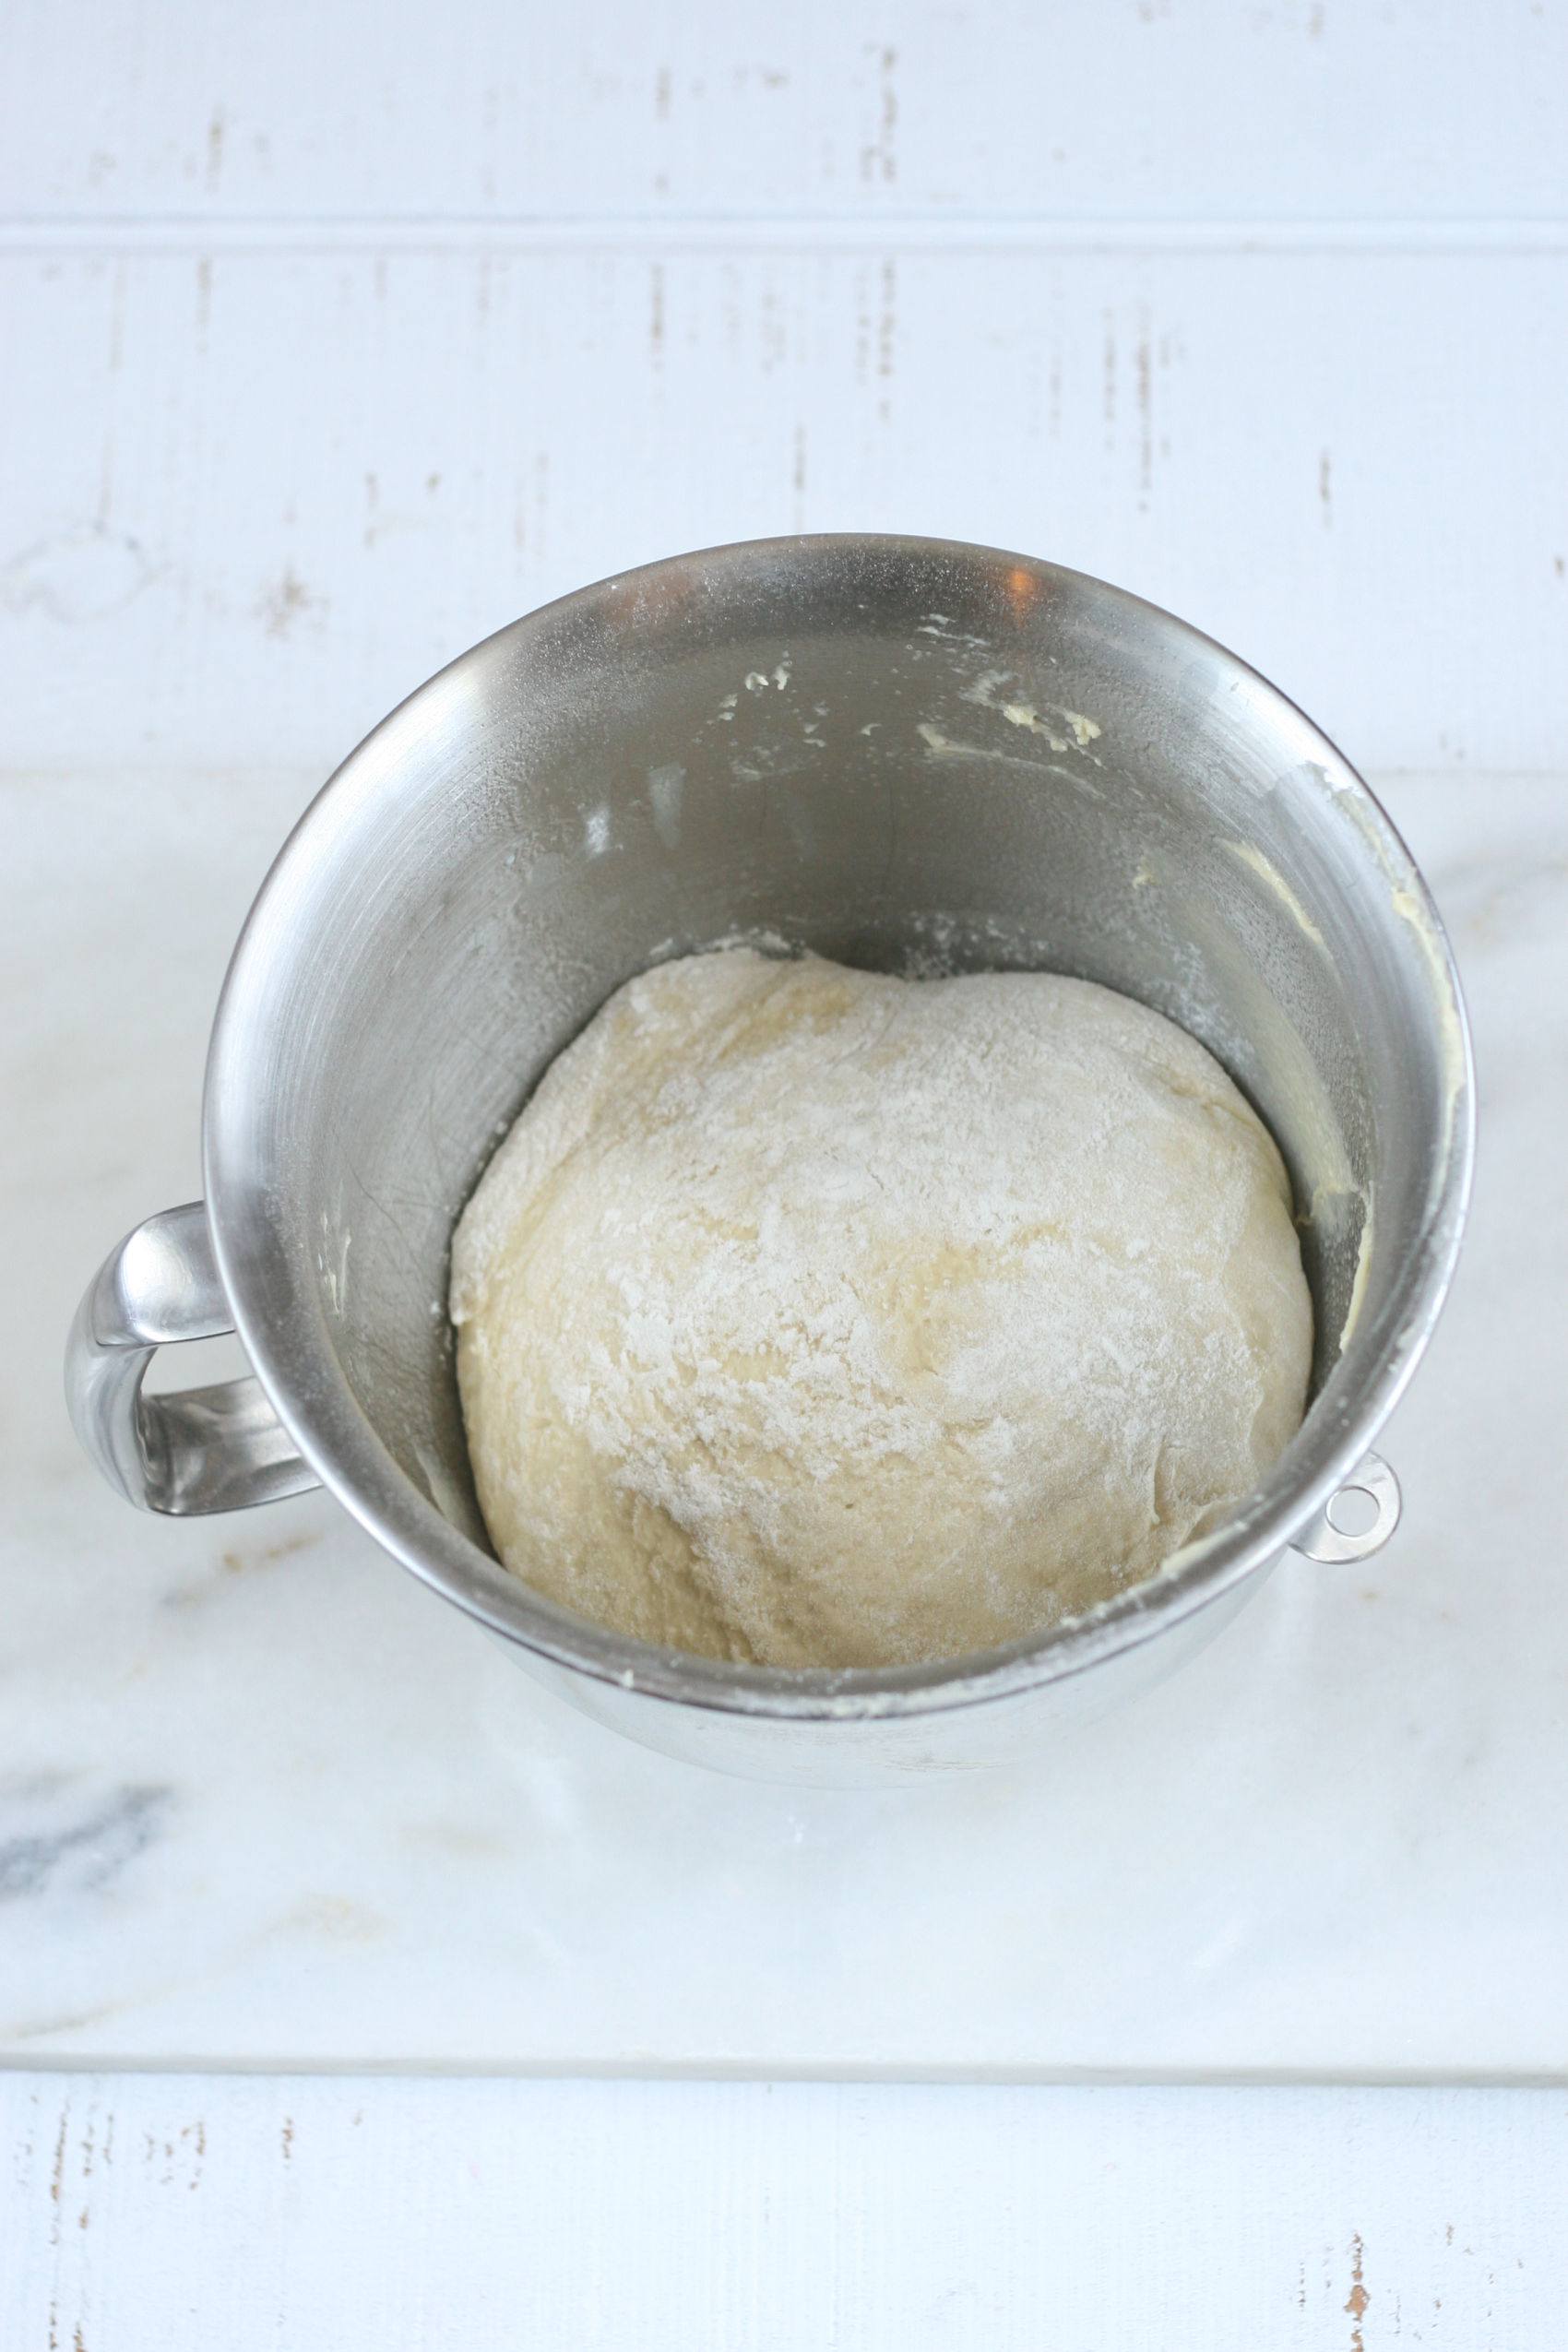 Pizza dough rising in mixing bowl